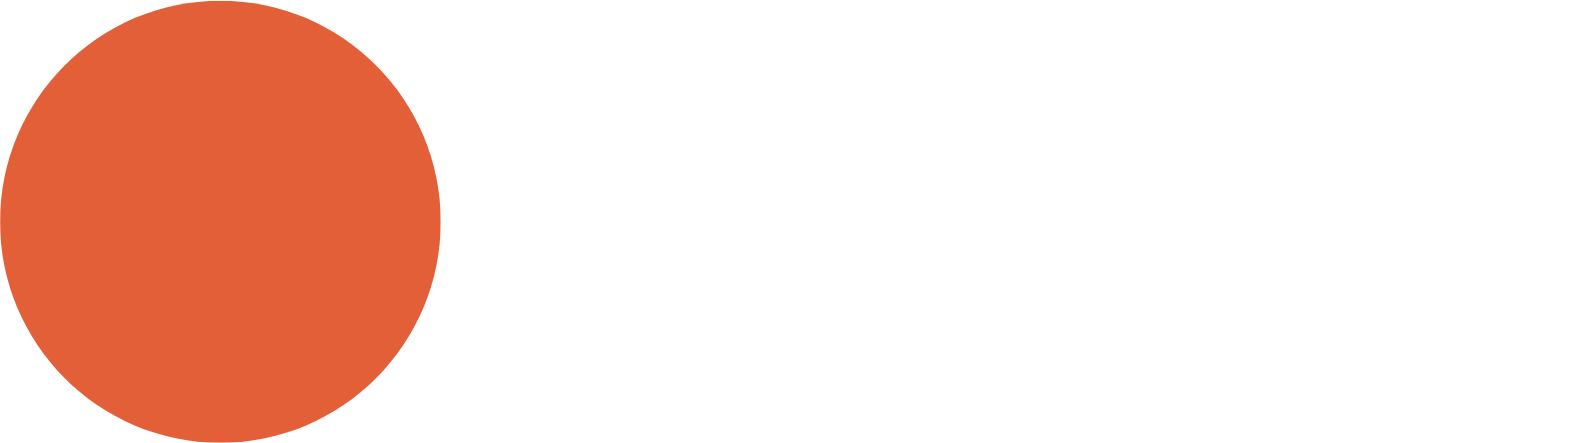 Phreesia logo grand pour les fonds sombres (PNG transparent)